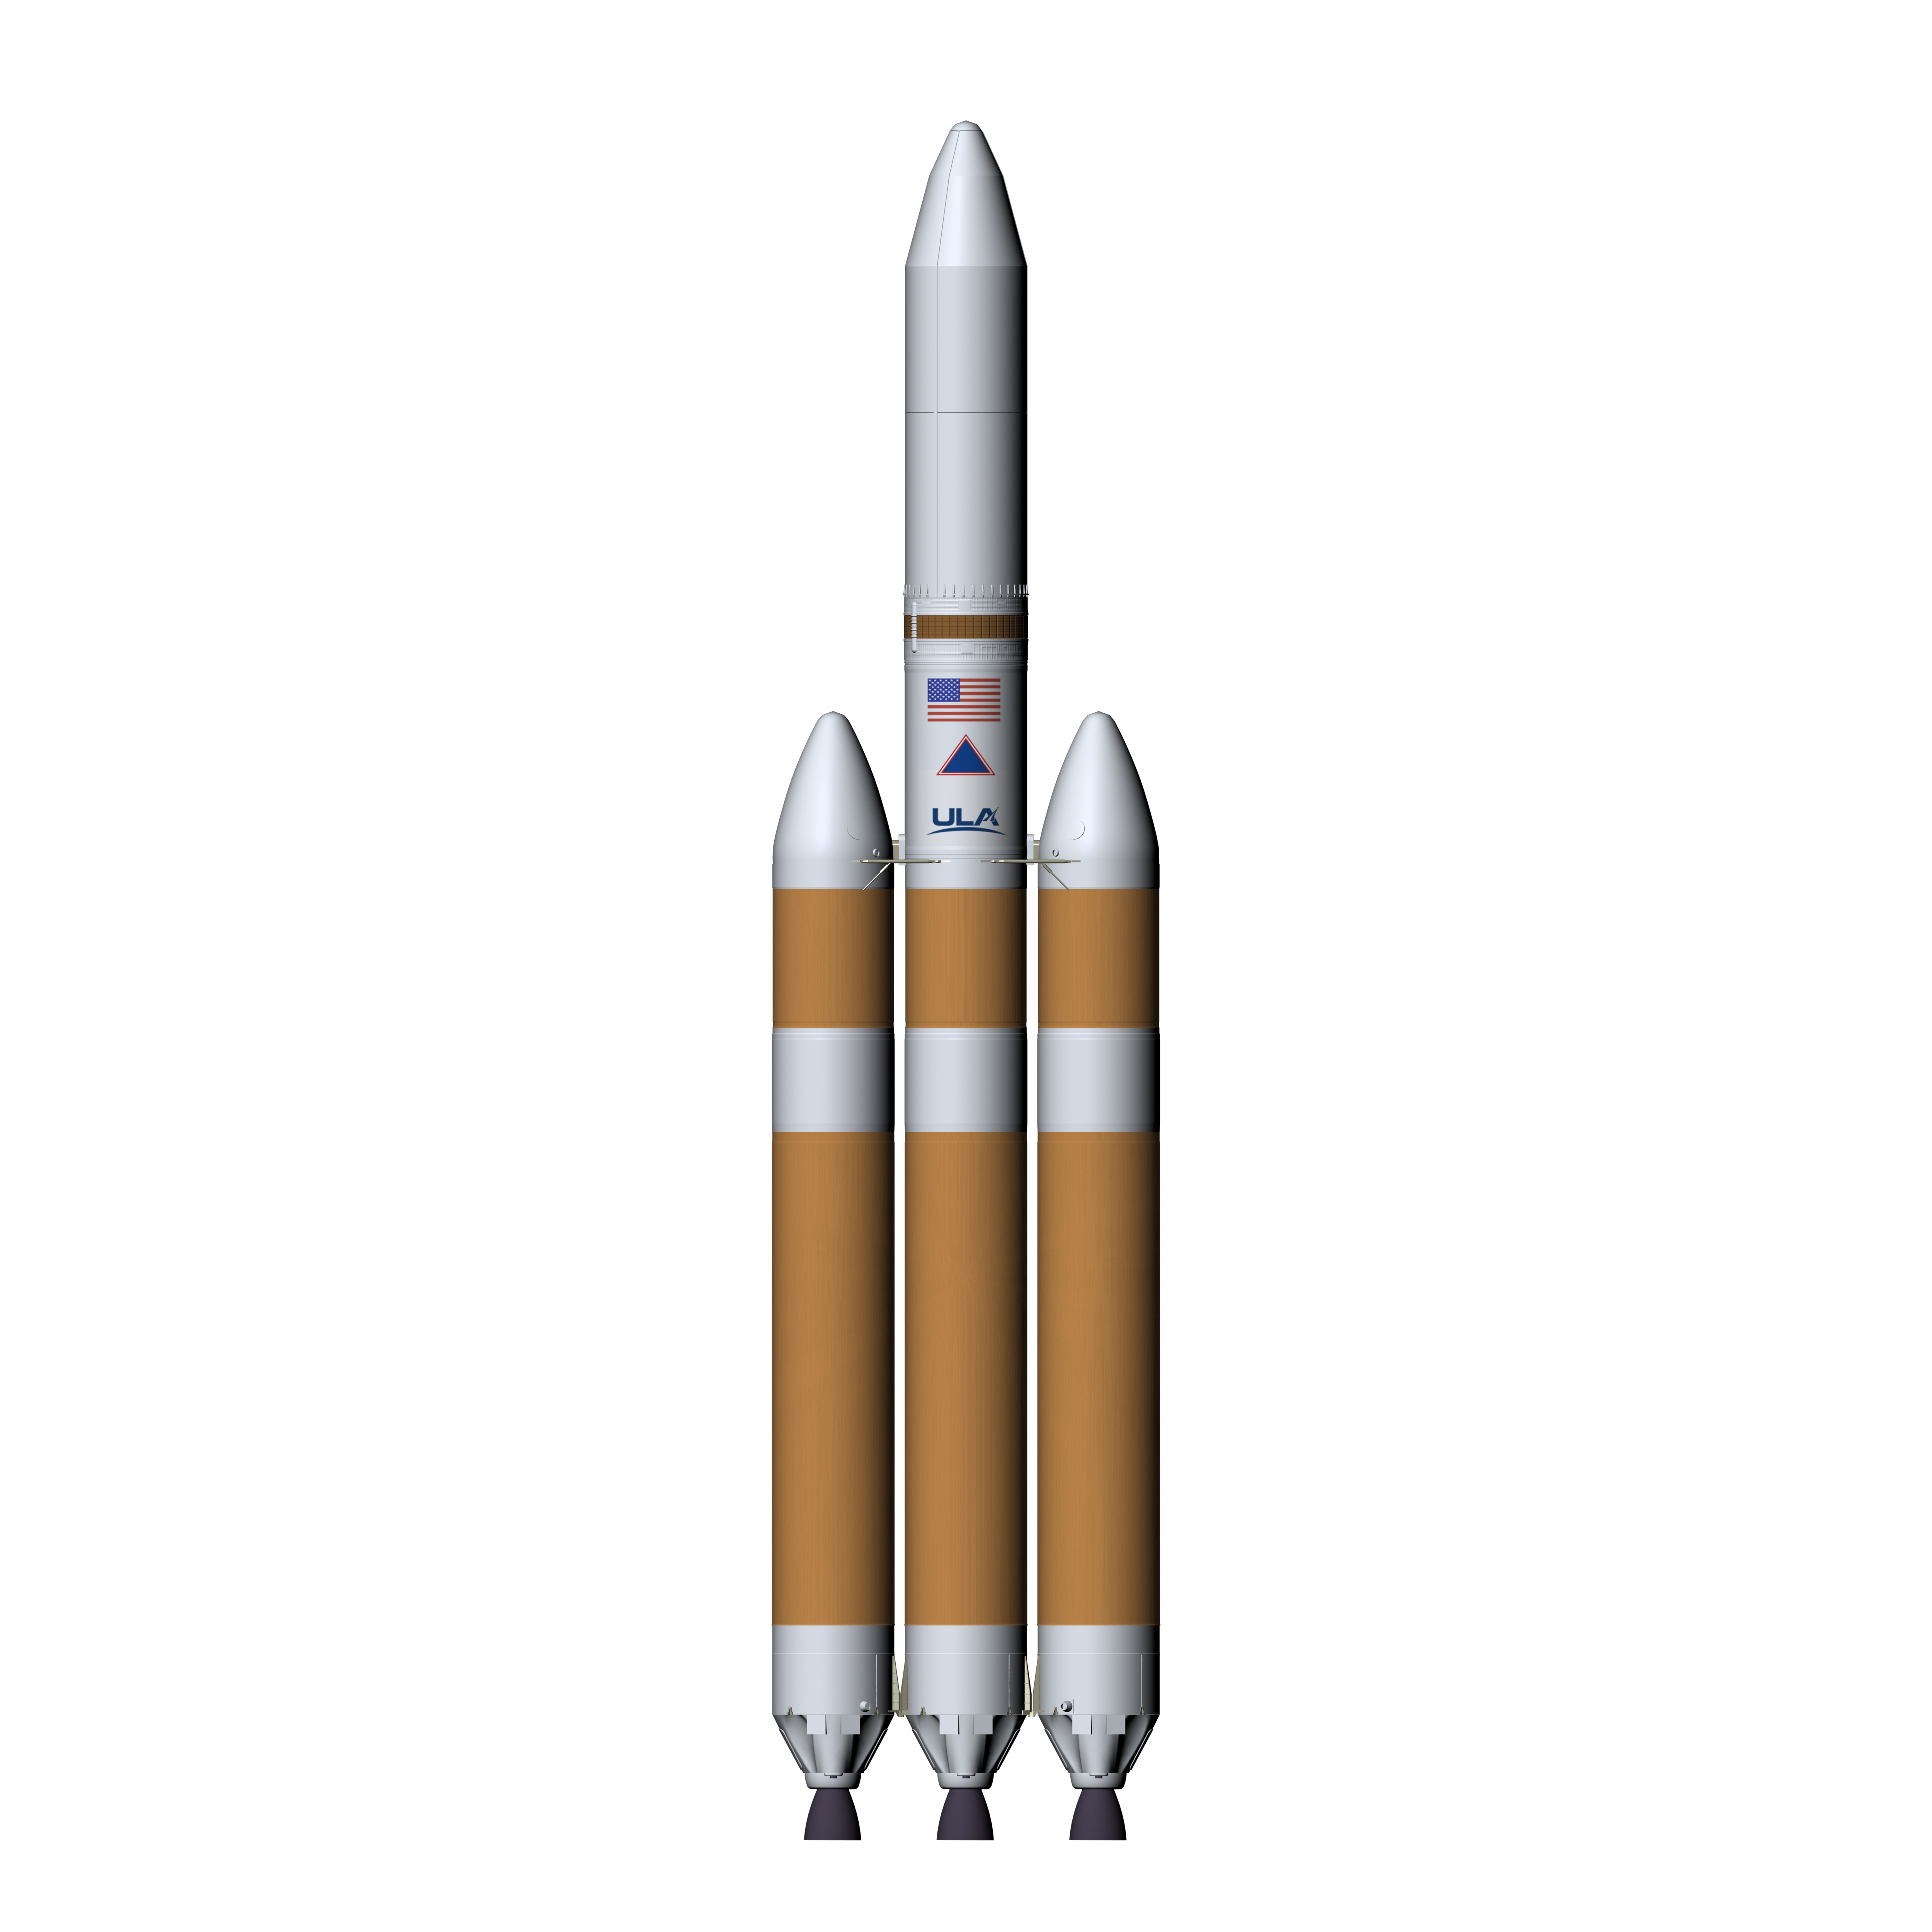 Delta IV Heavy 3D Model